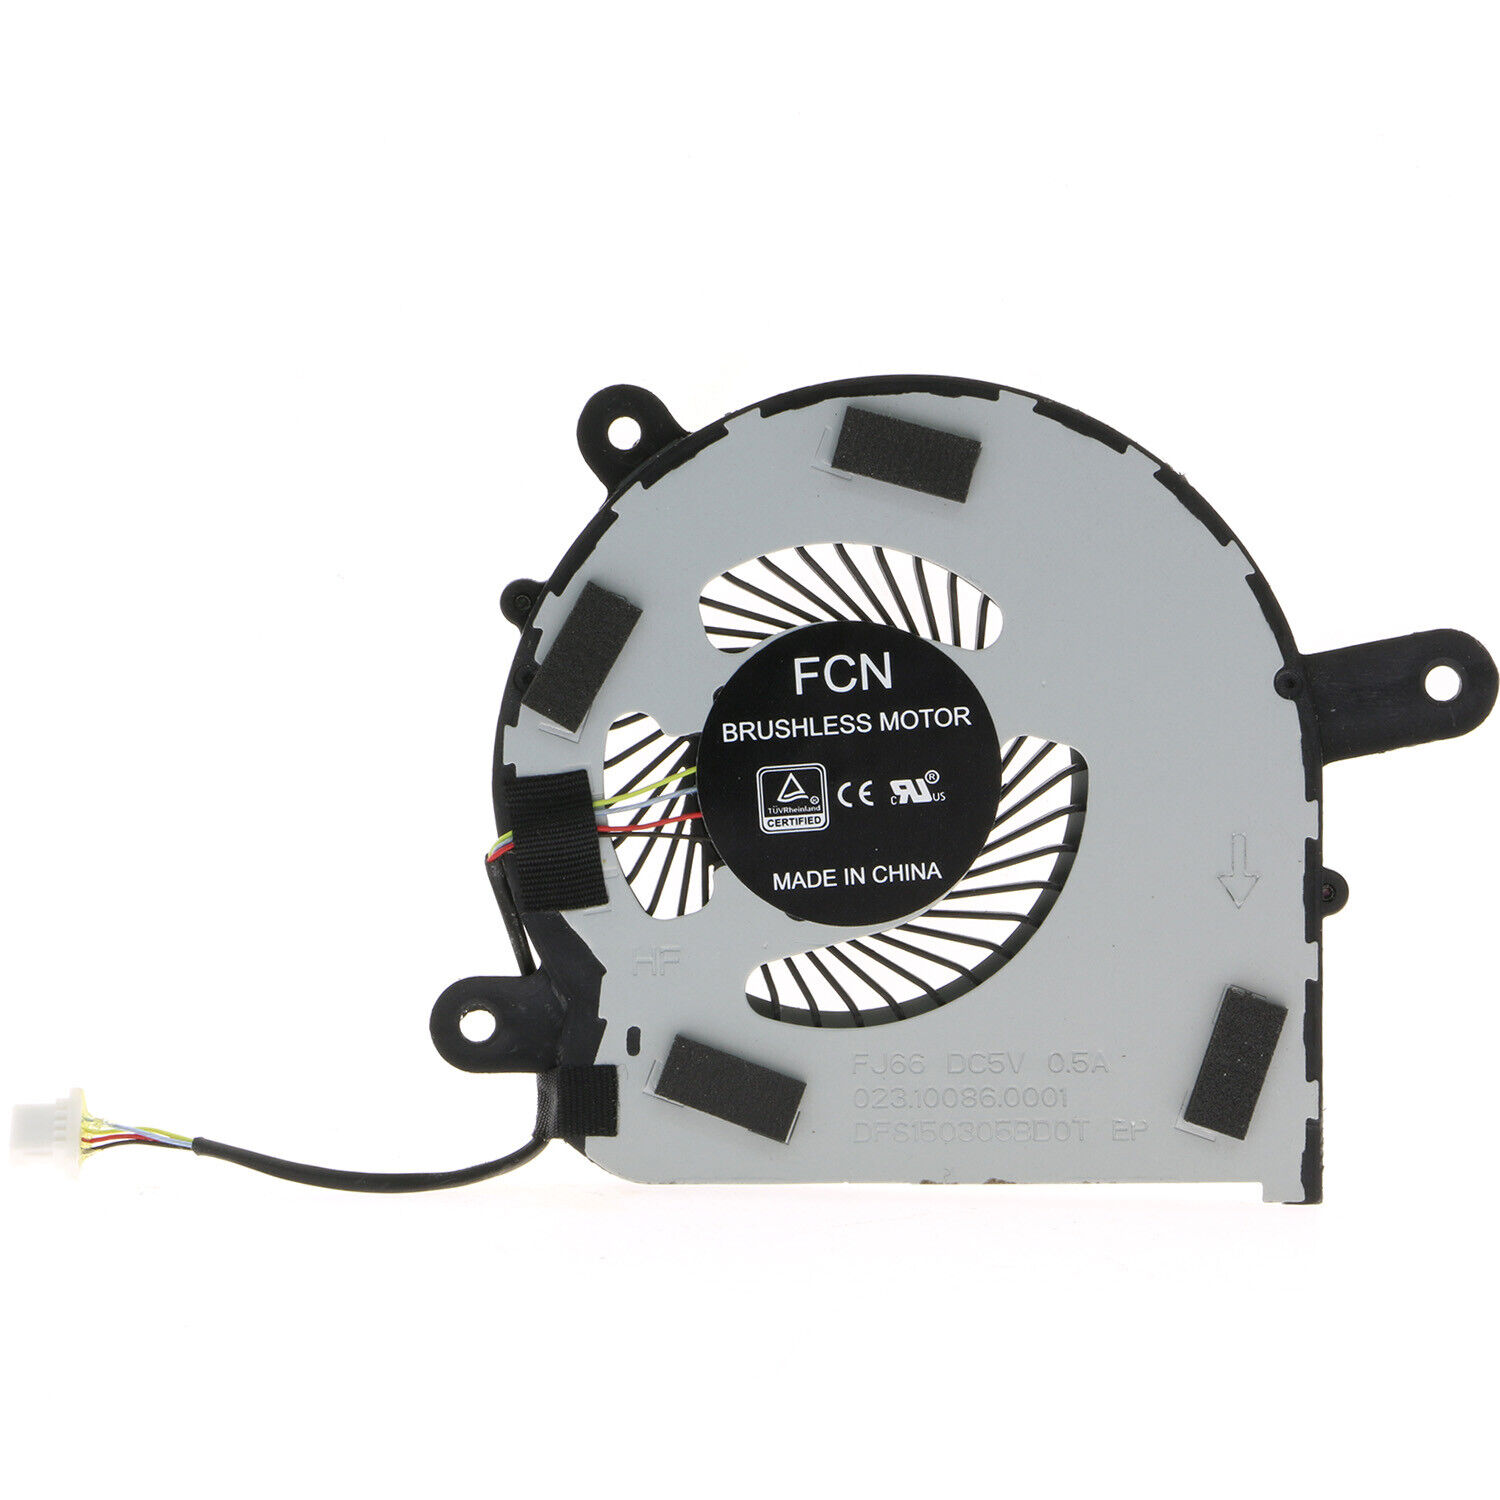 NEW For HP Elitedesk 800 G3 65W models 914256-001 SATA HDD Cooling Fan